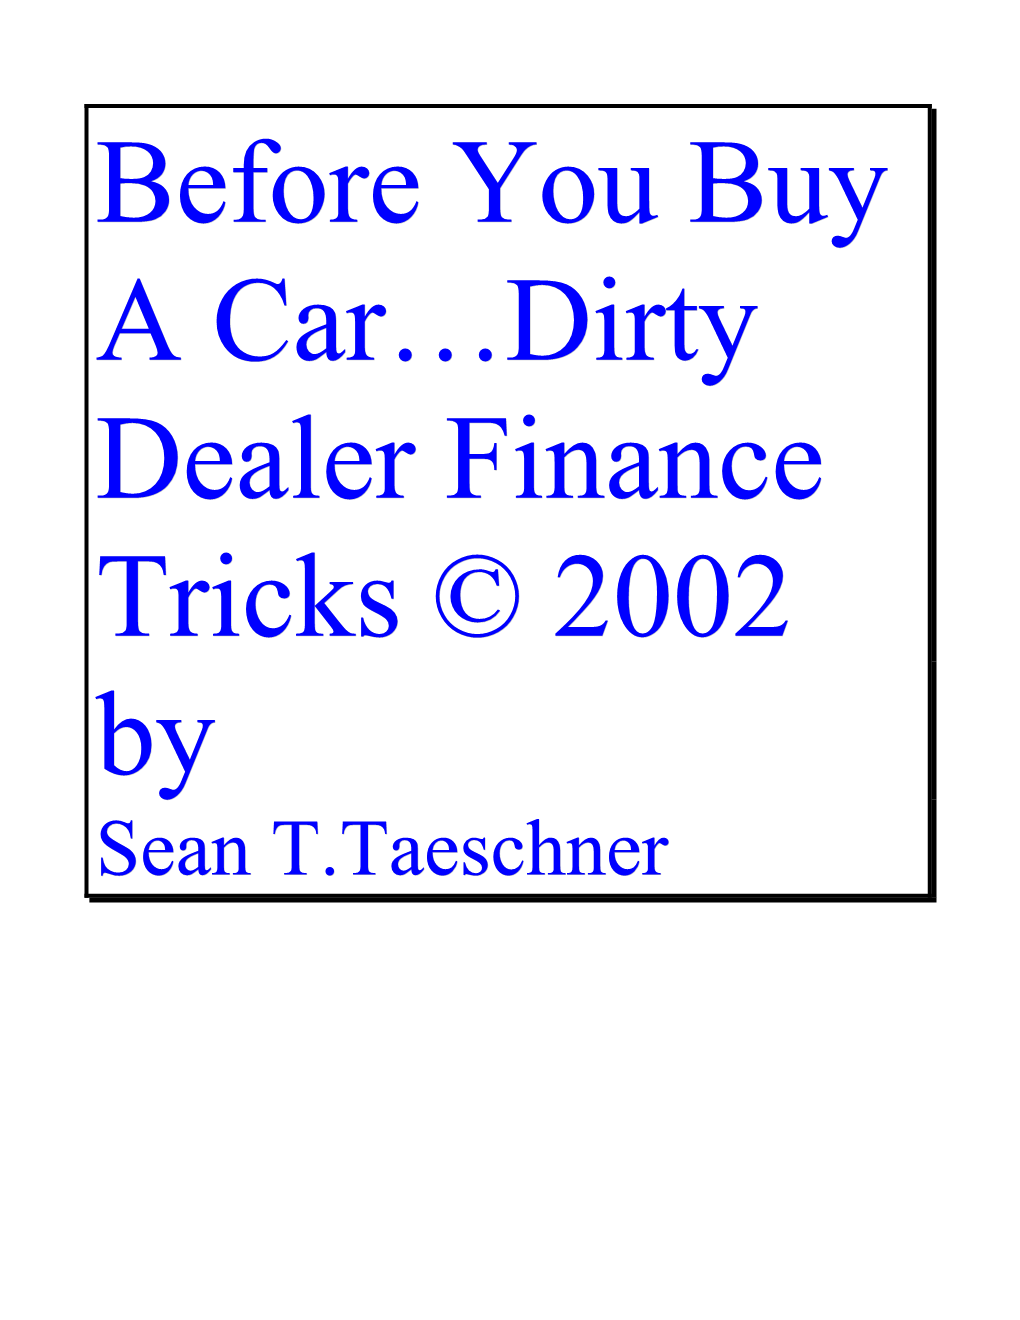 Before You Buy a Car Dirty Dealer Finance Tricks 2002